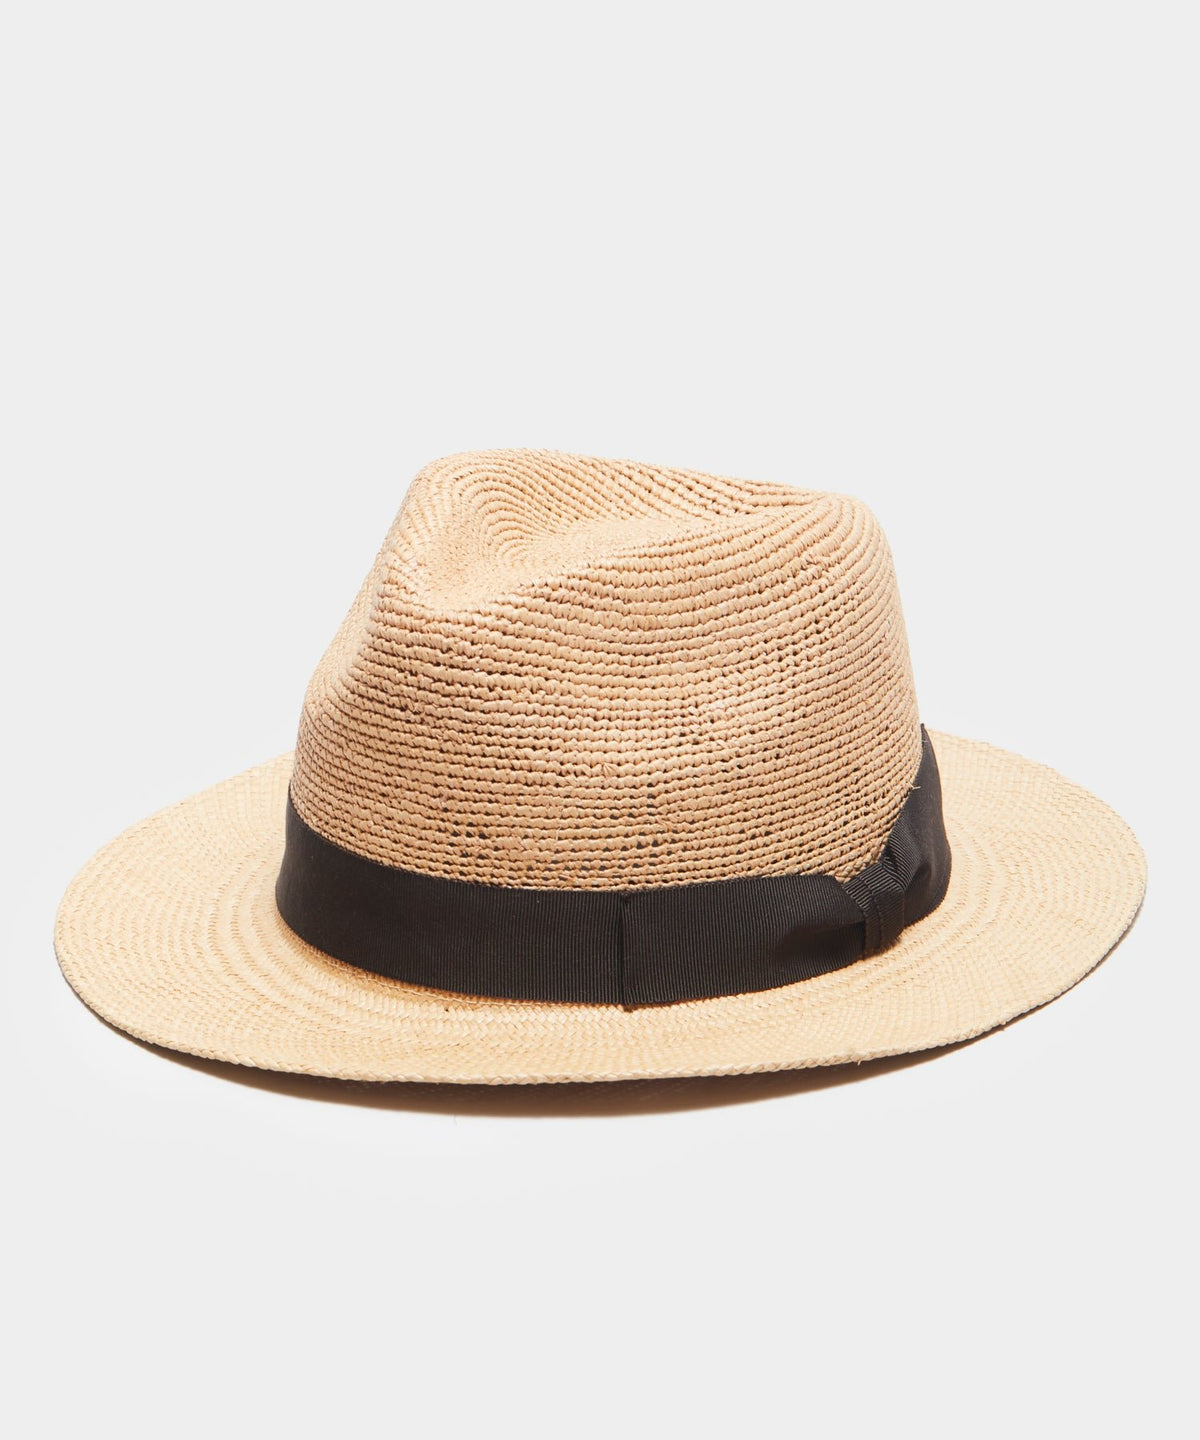 Câbleami Panama Hat with Black Hatband